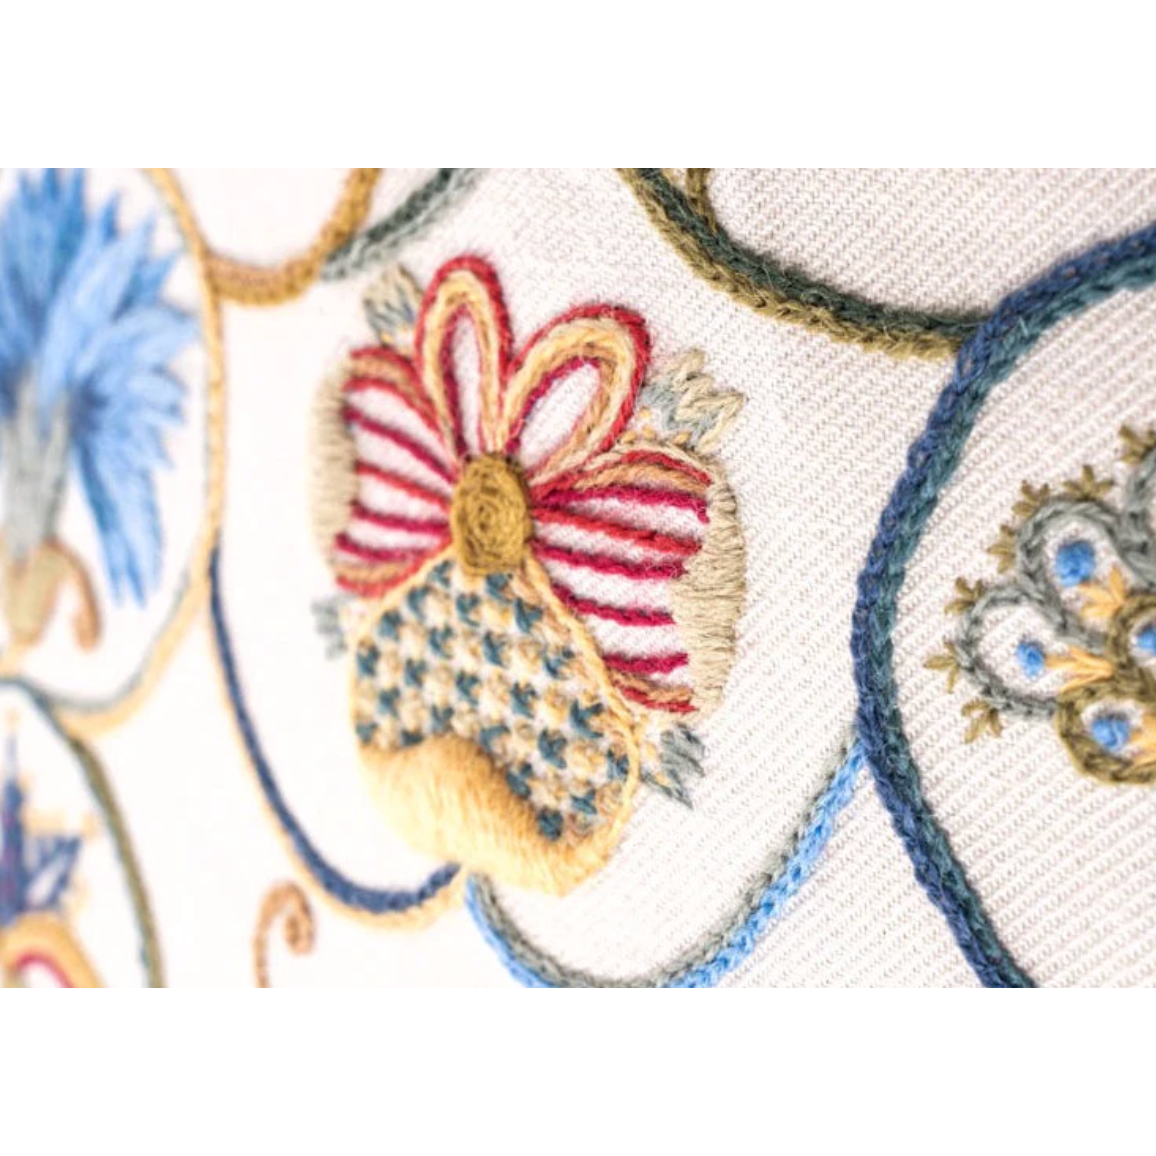 Crewel Sampler Embroidery Kit - The Floss Box